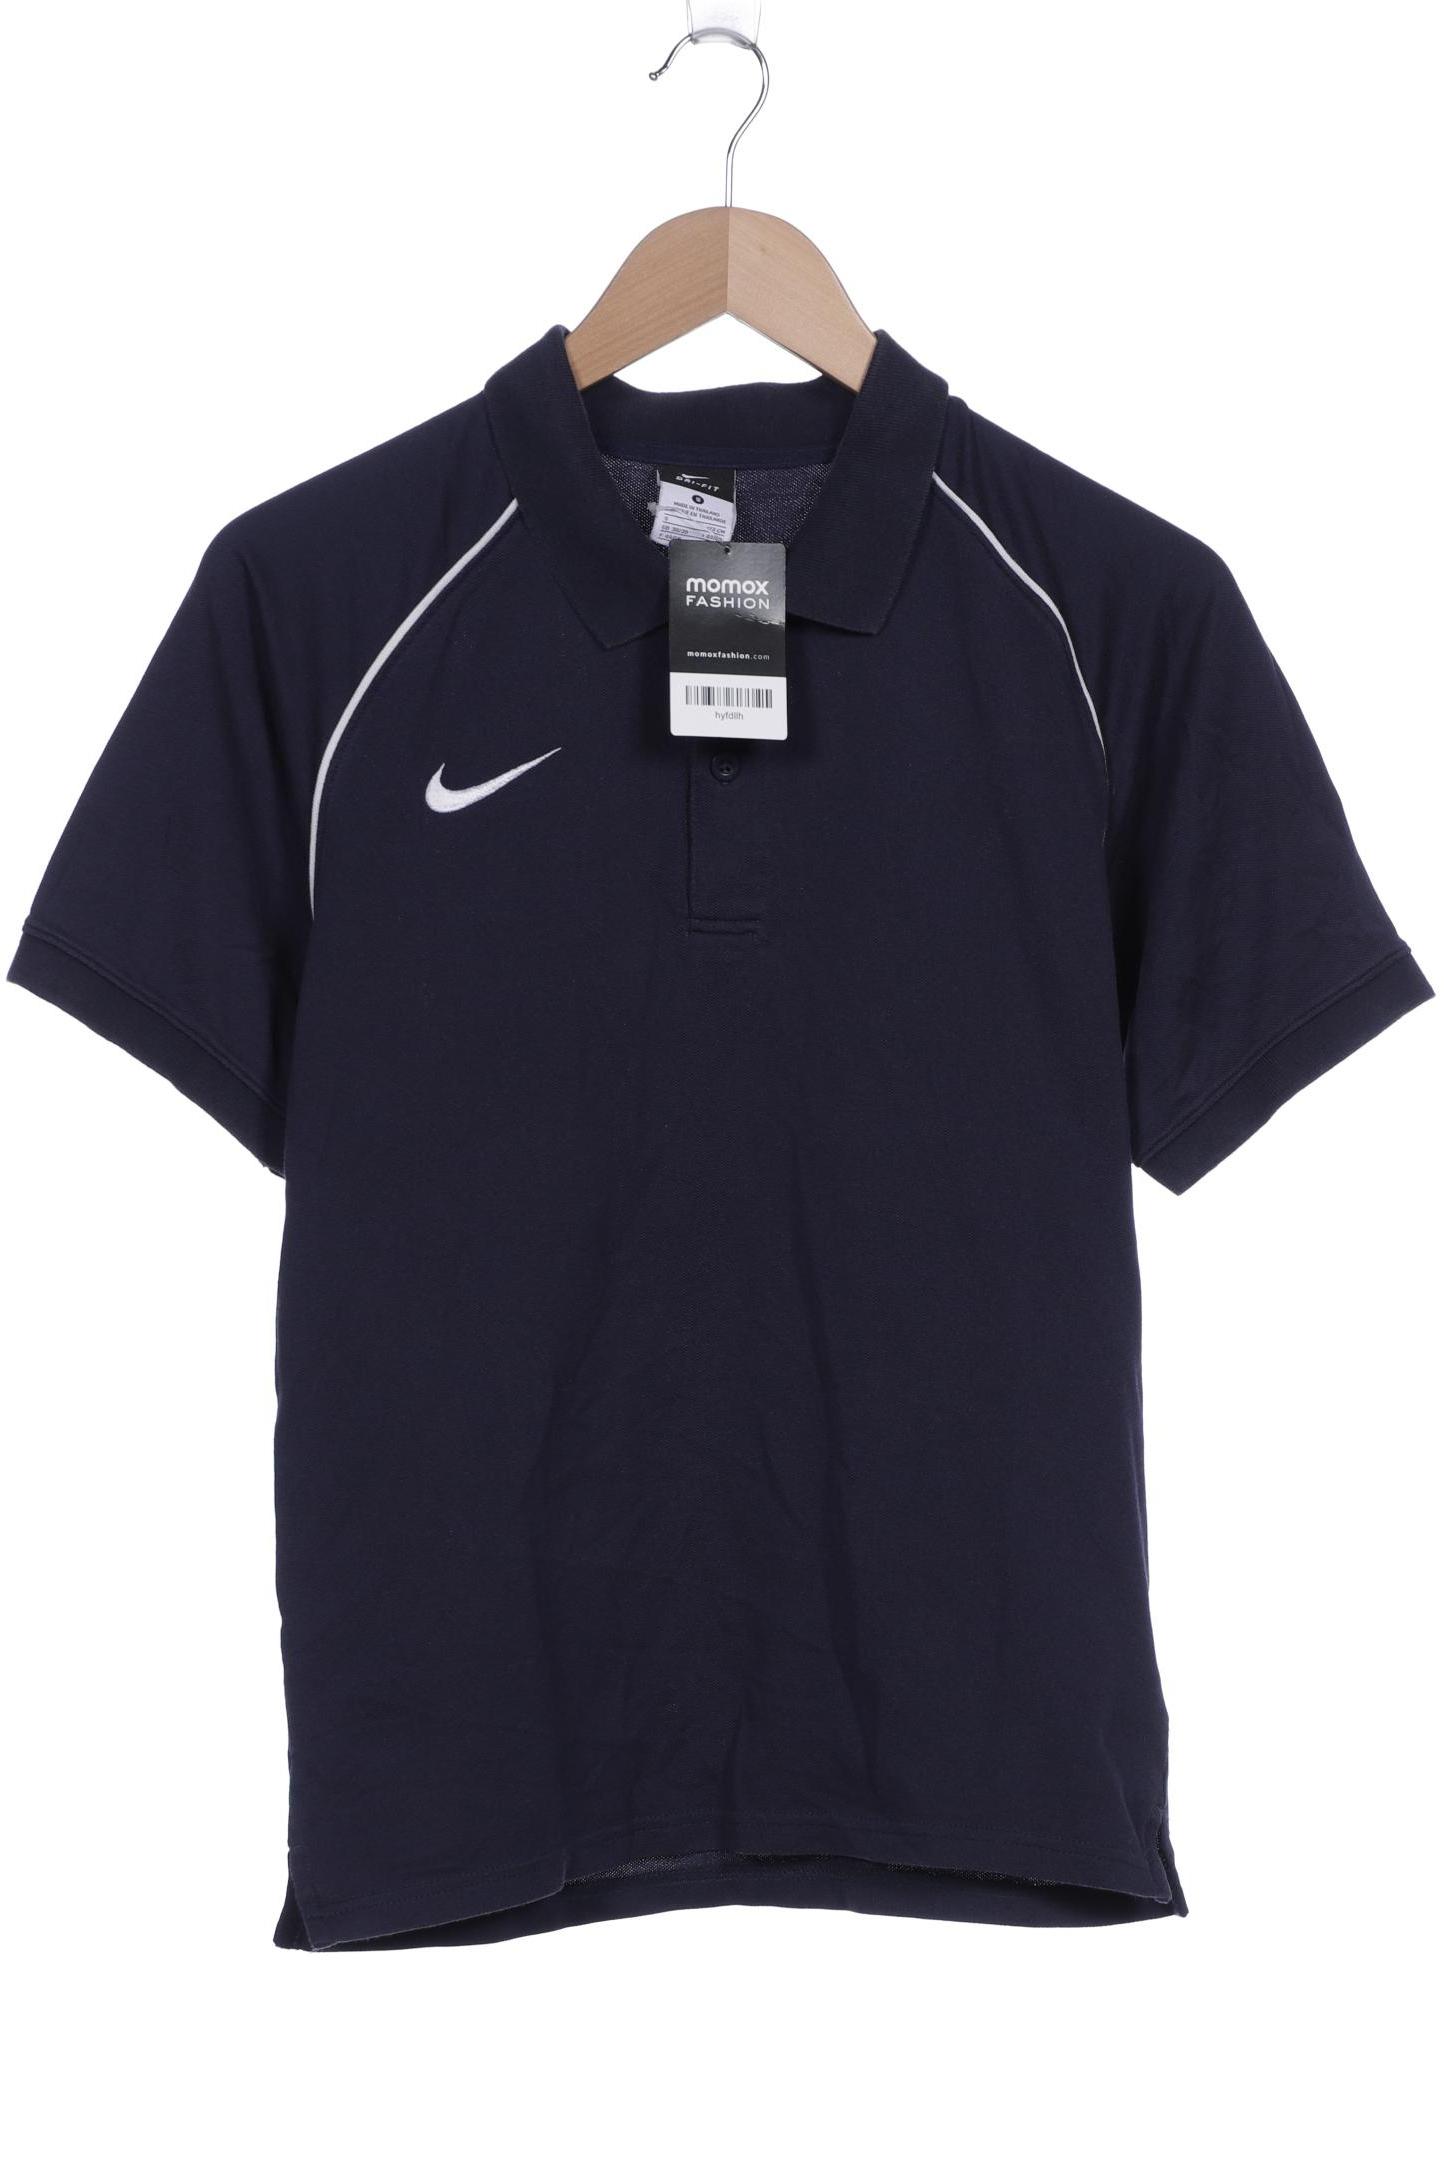 Nike Herren Poloshirt, marineblau, Gr. 46 von Nike